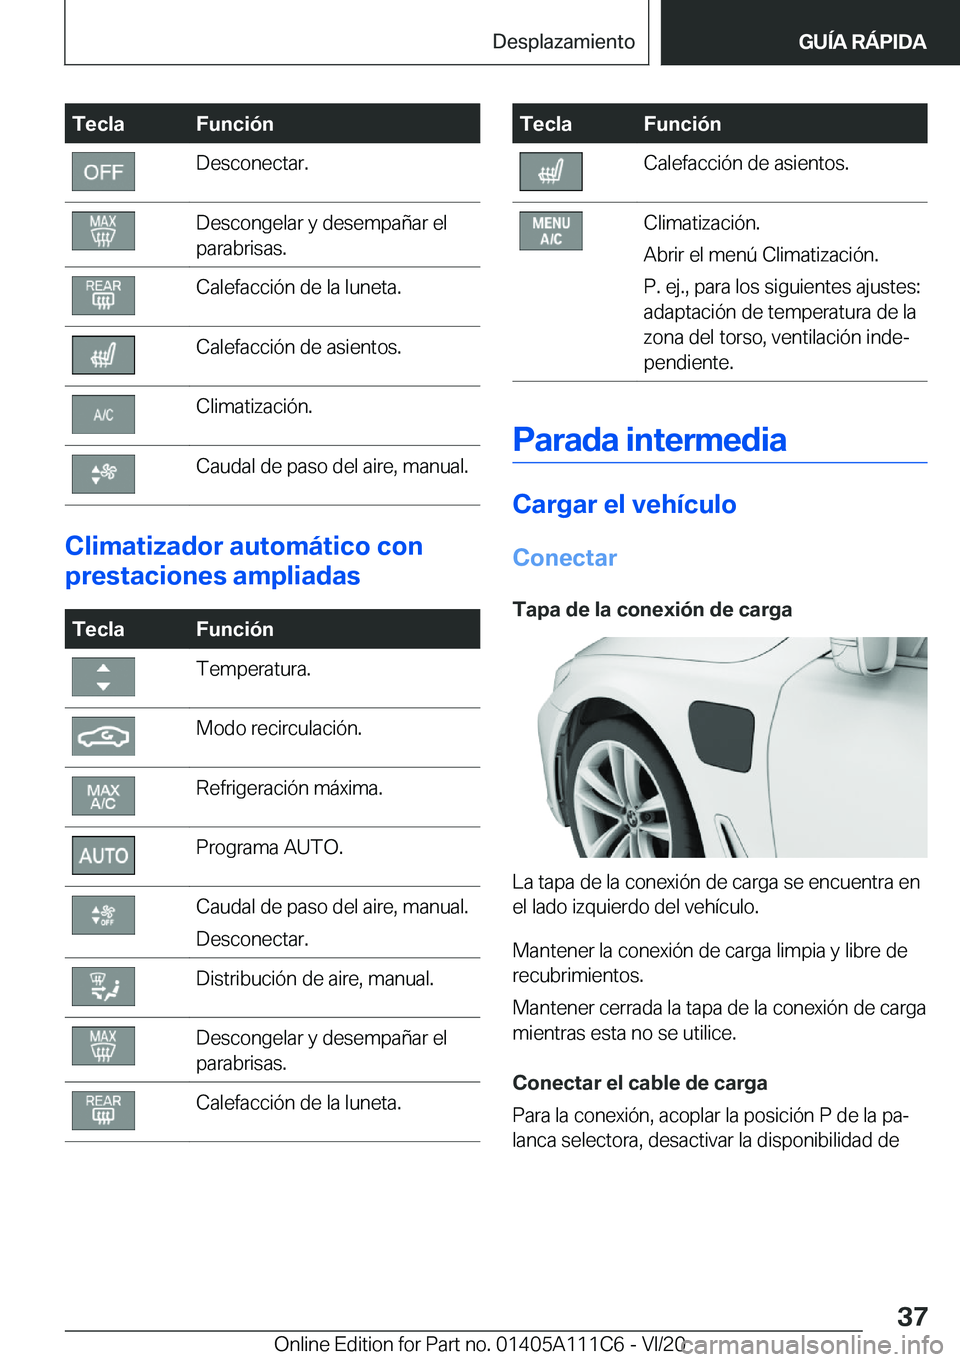 BMW 3 SERIES SEDAN PLUG-IN HYBRID 2021  Manuales de Empleo (in Spanish) �T�e�c�l�a�F�u�n�c�i�